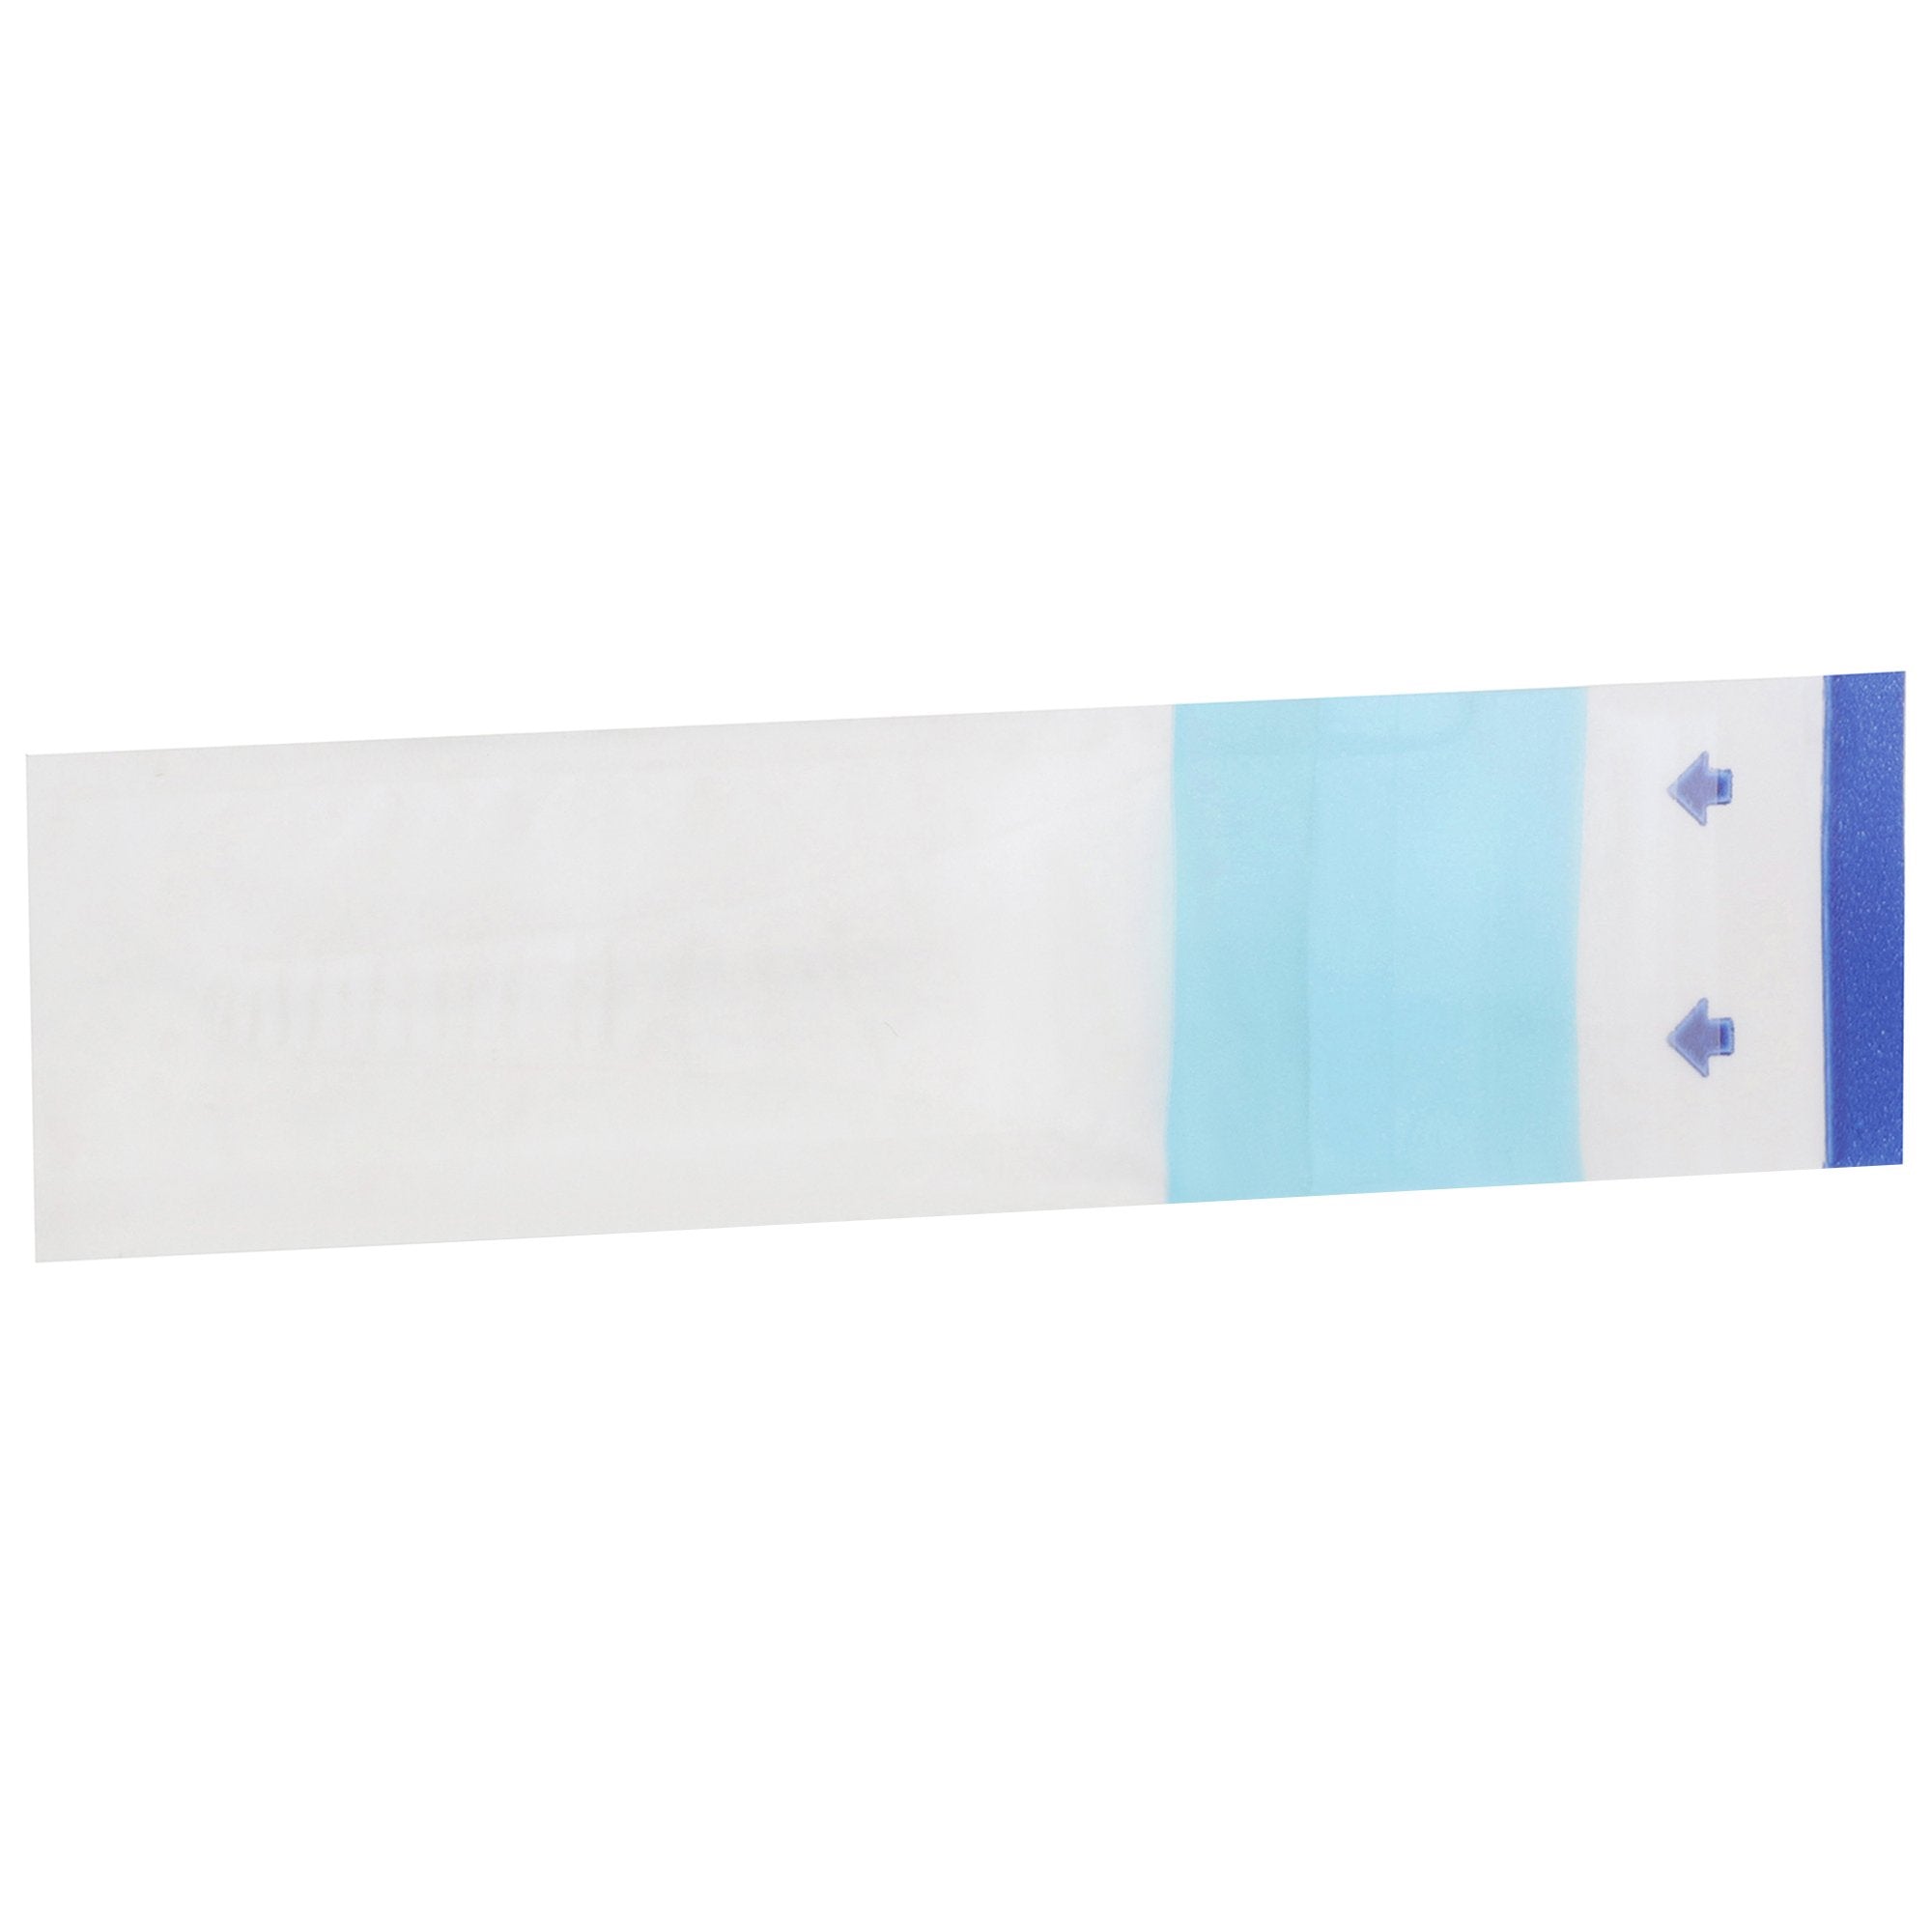 Oral Thermometer Probe Cover McKesson For use with Digital Thermometer 50 per Box